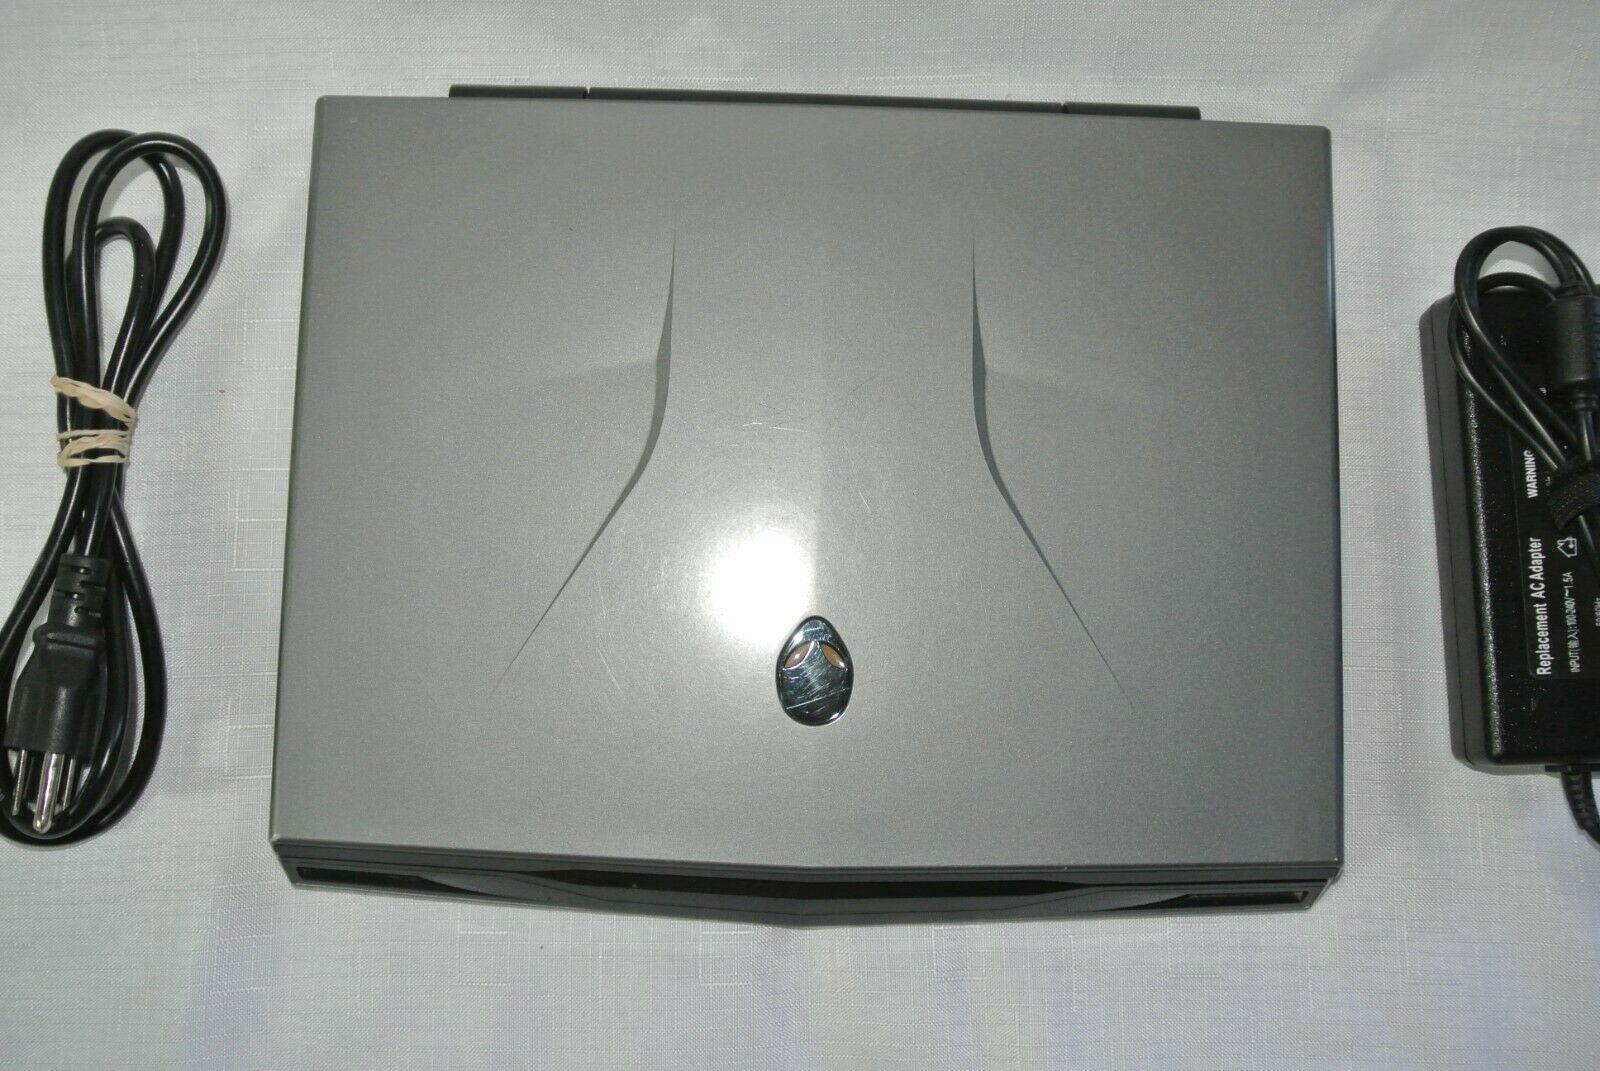 Alienware Laptop P06T i7- U640 Win7 1.20GHz 4GB RAM 500GB HD 64-bit Fresh Window